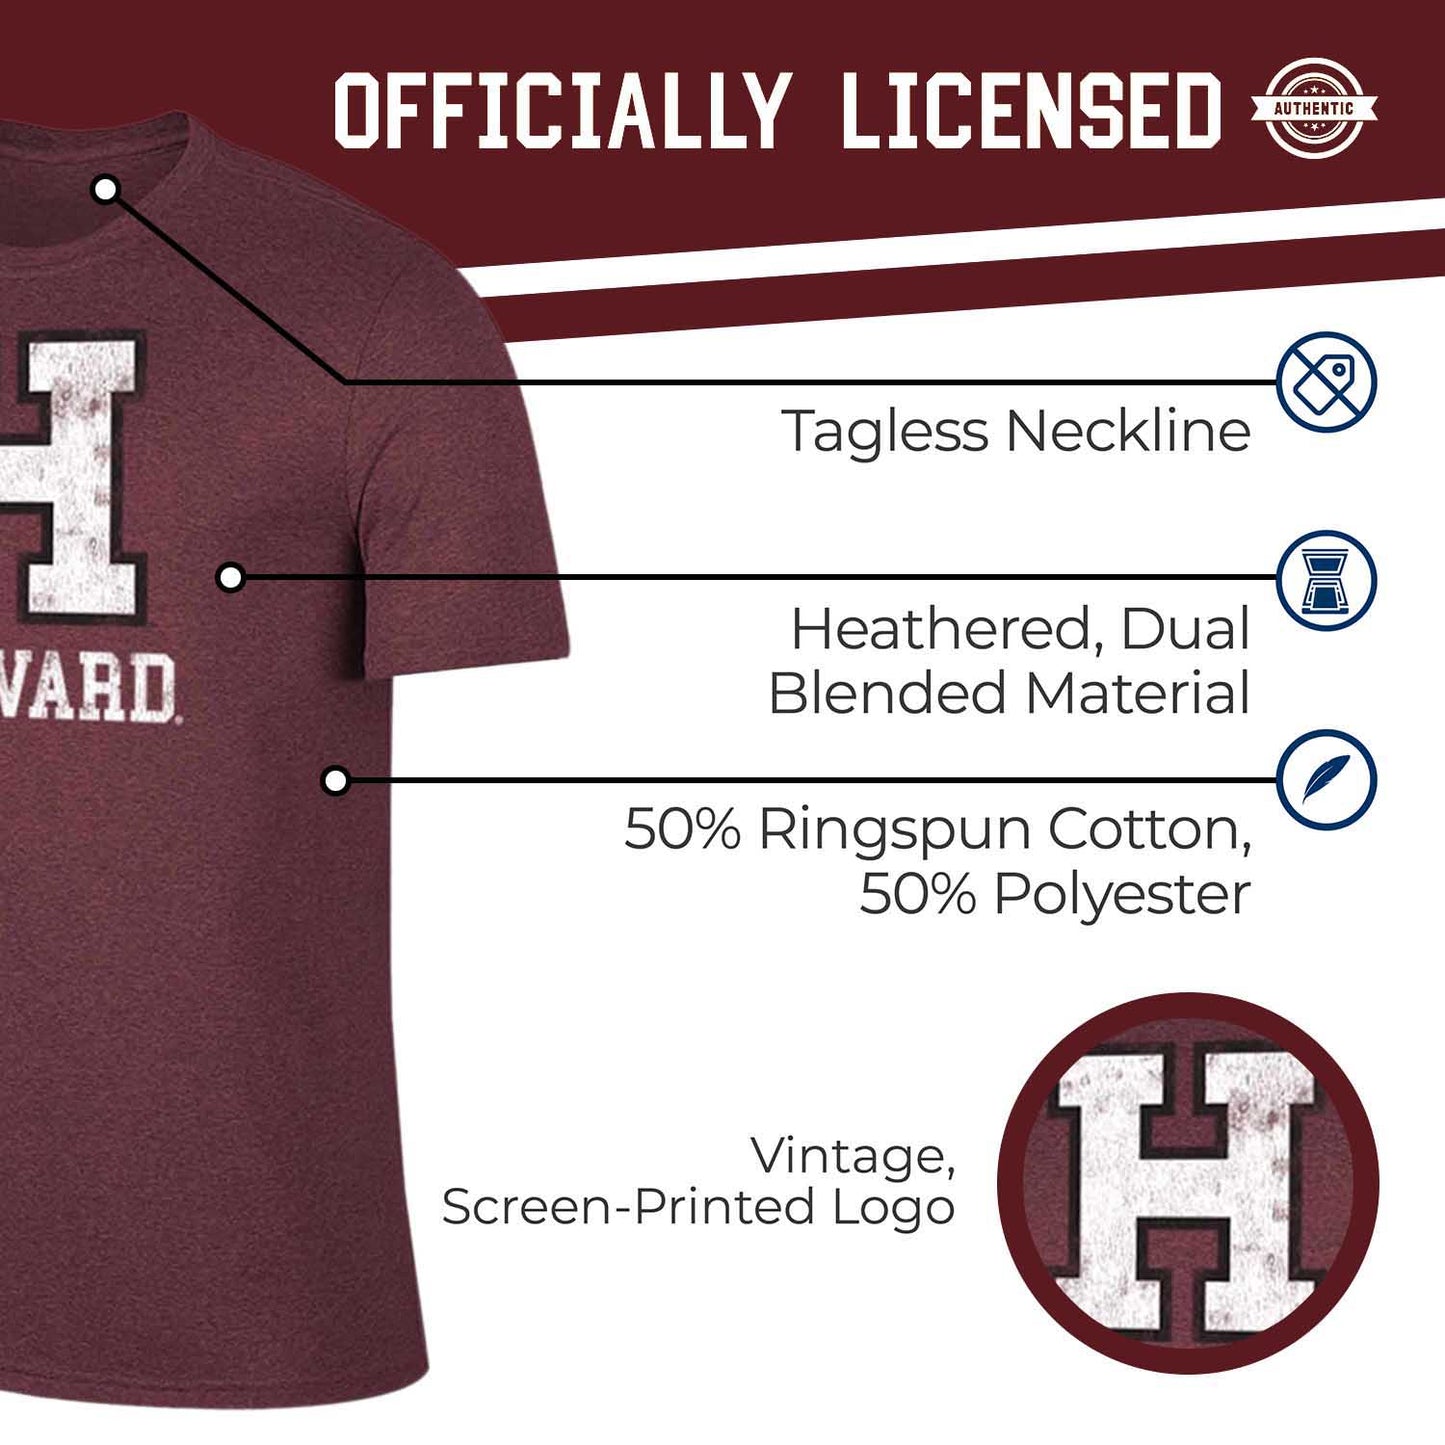 Harvard Crimson Adult MVP Heathered Cotton Blend T-Shirt - Maroon